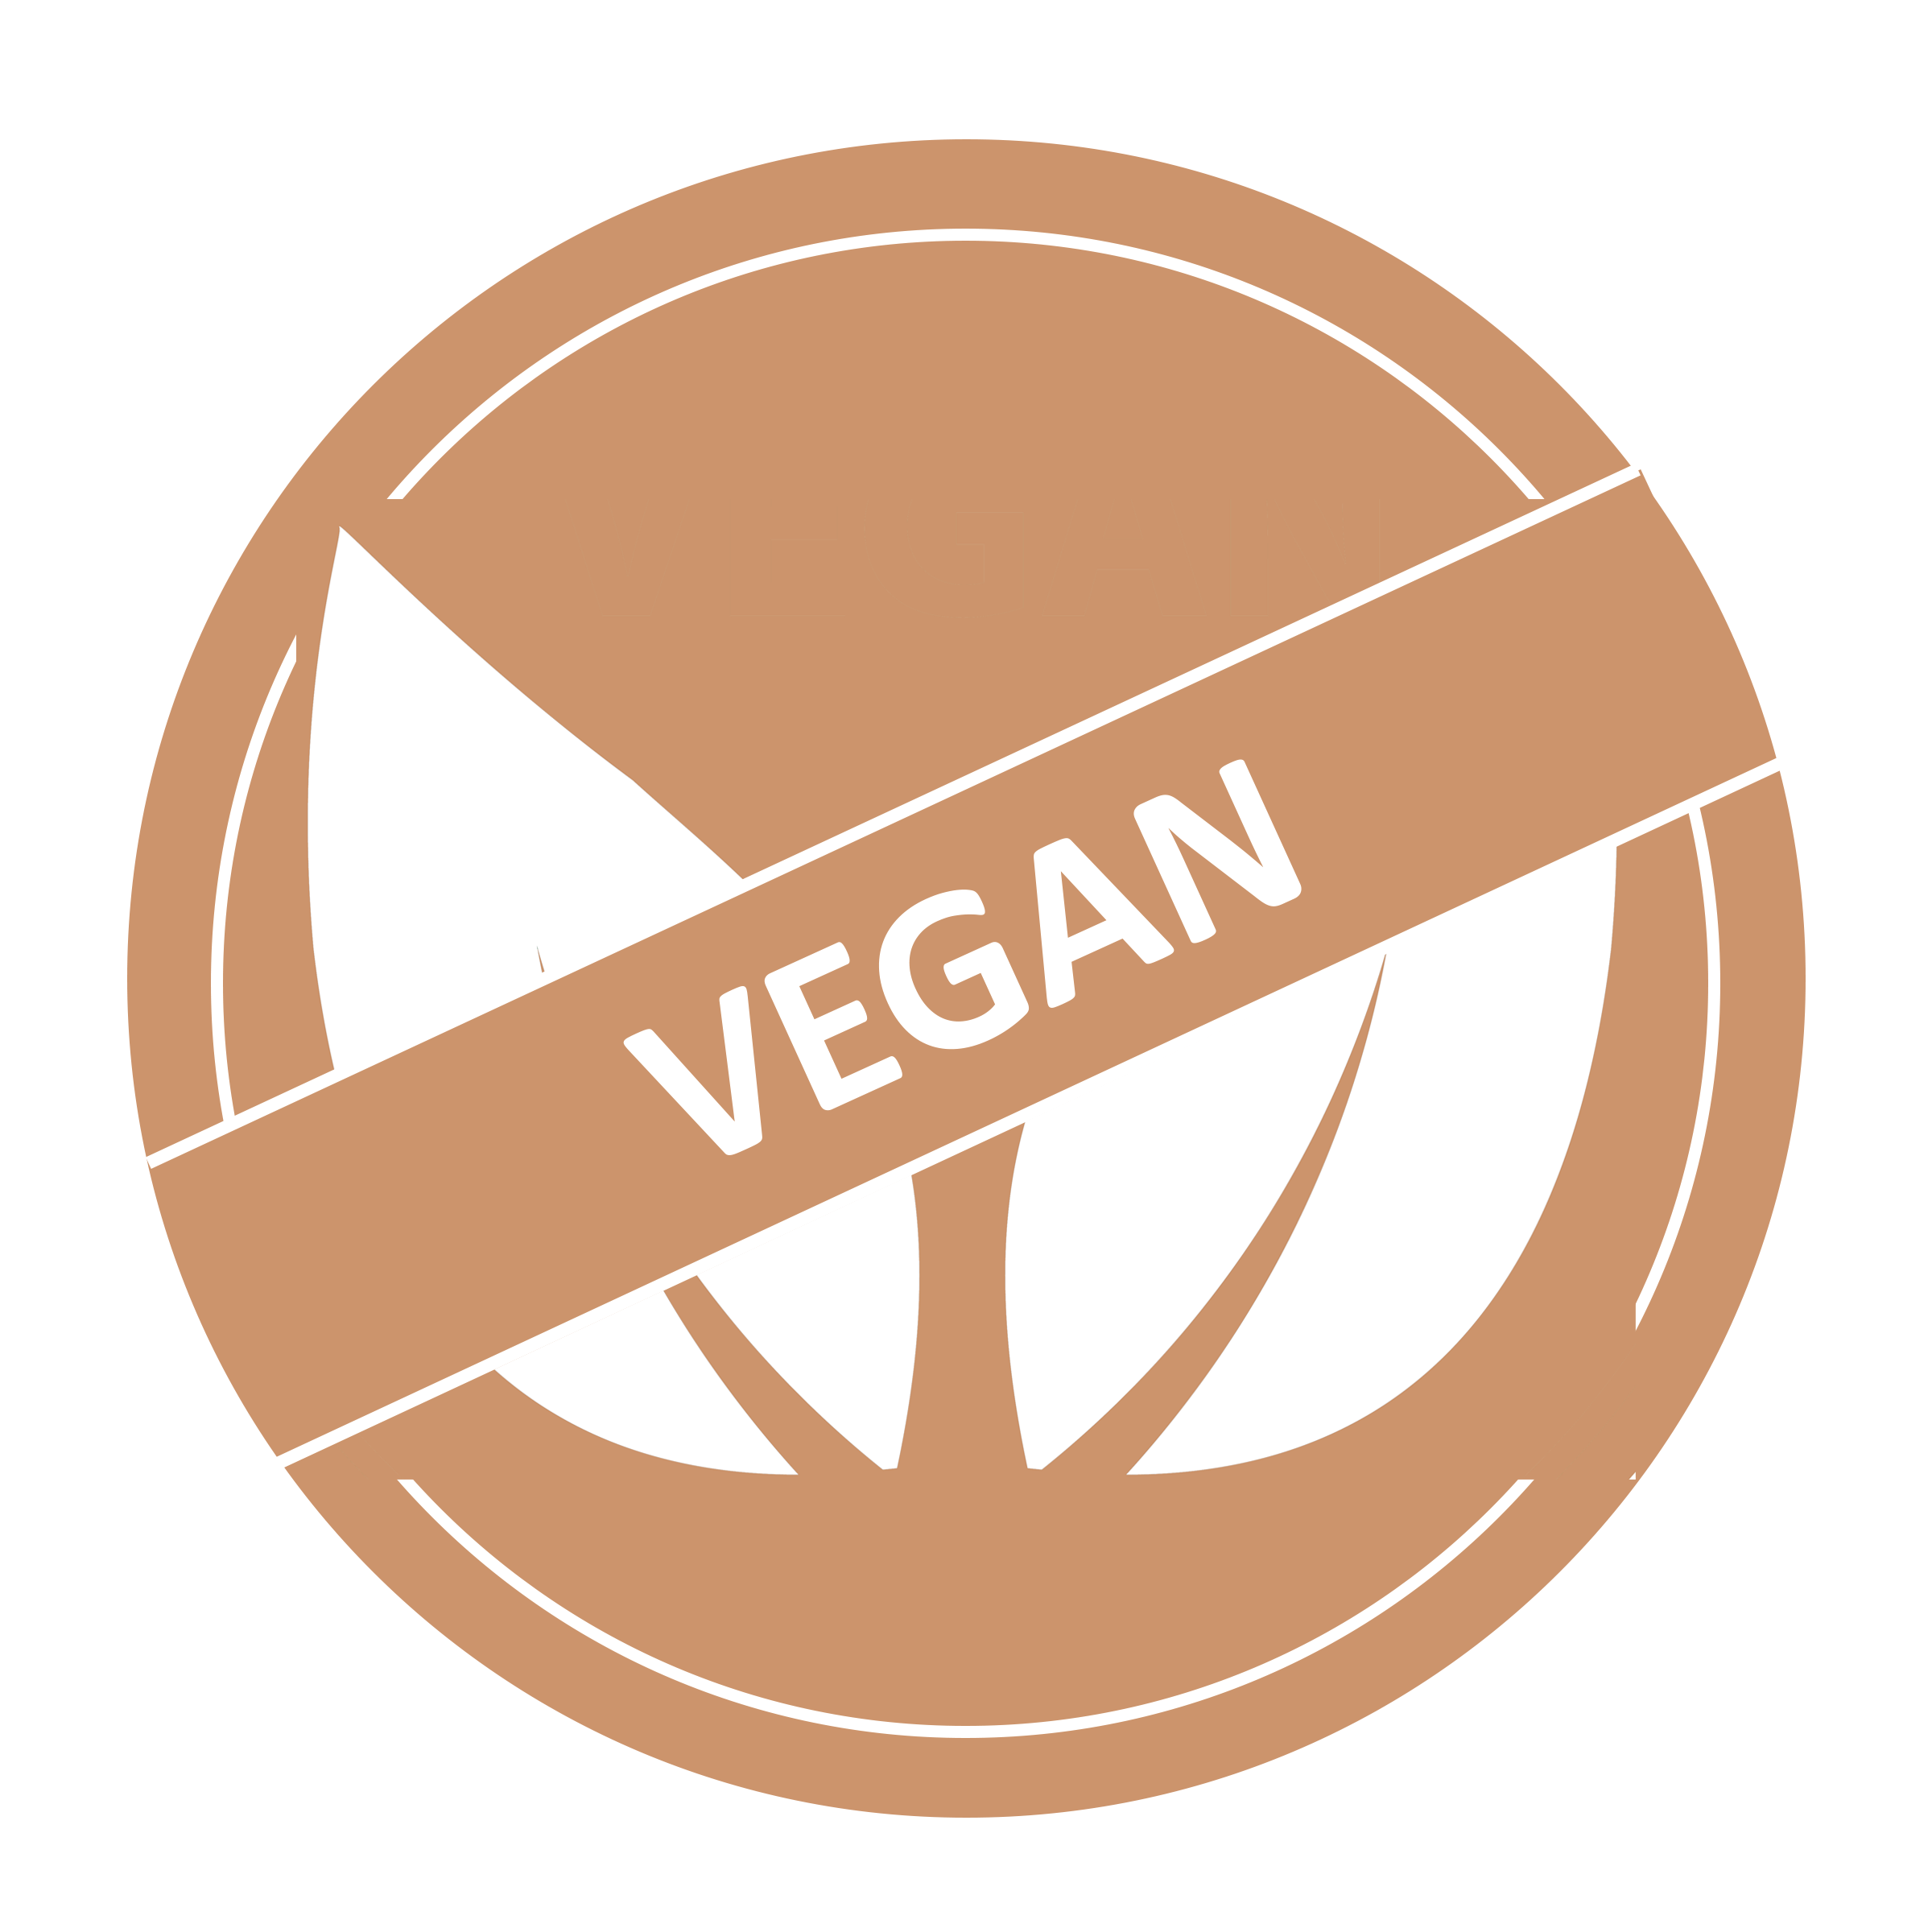 Icon vegan